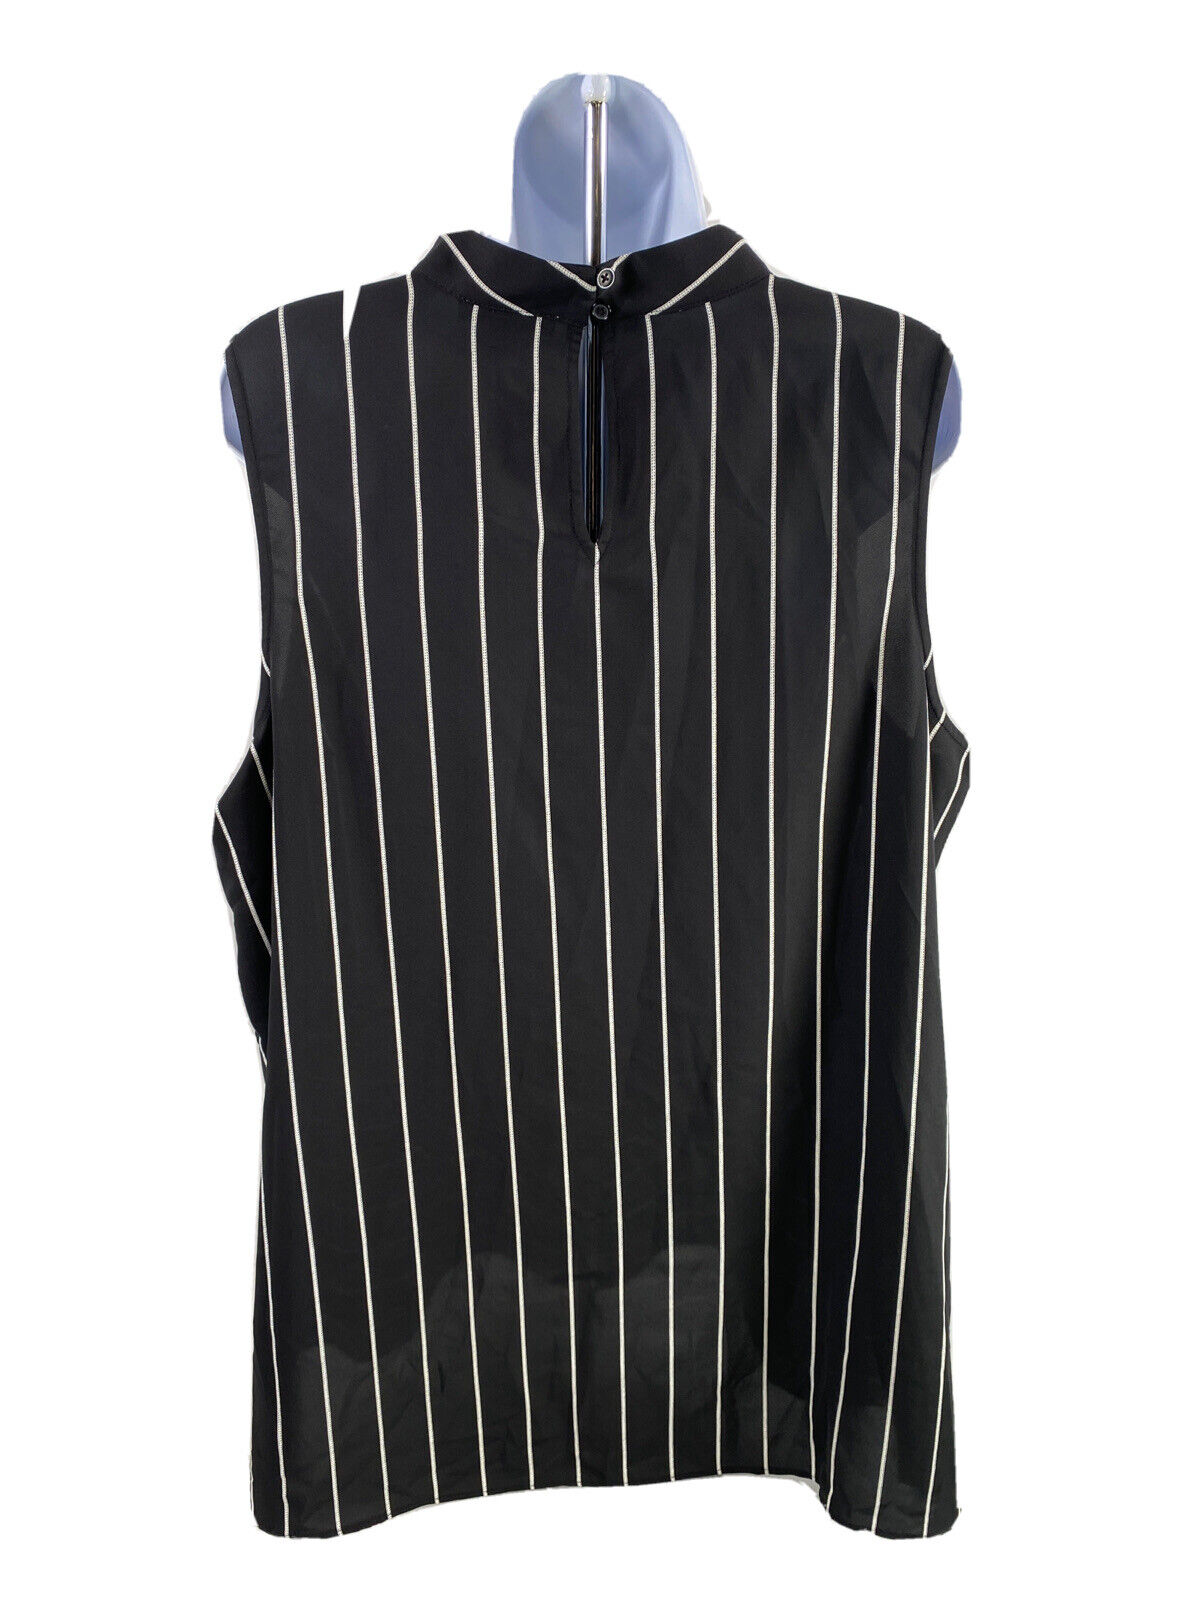 NEW Nine West Women's Black Vertical Striped Sleeveless Blouse Top - XL